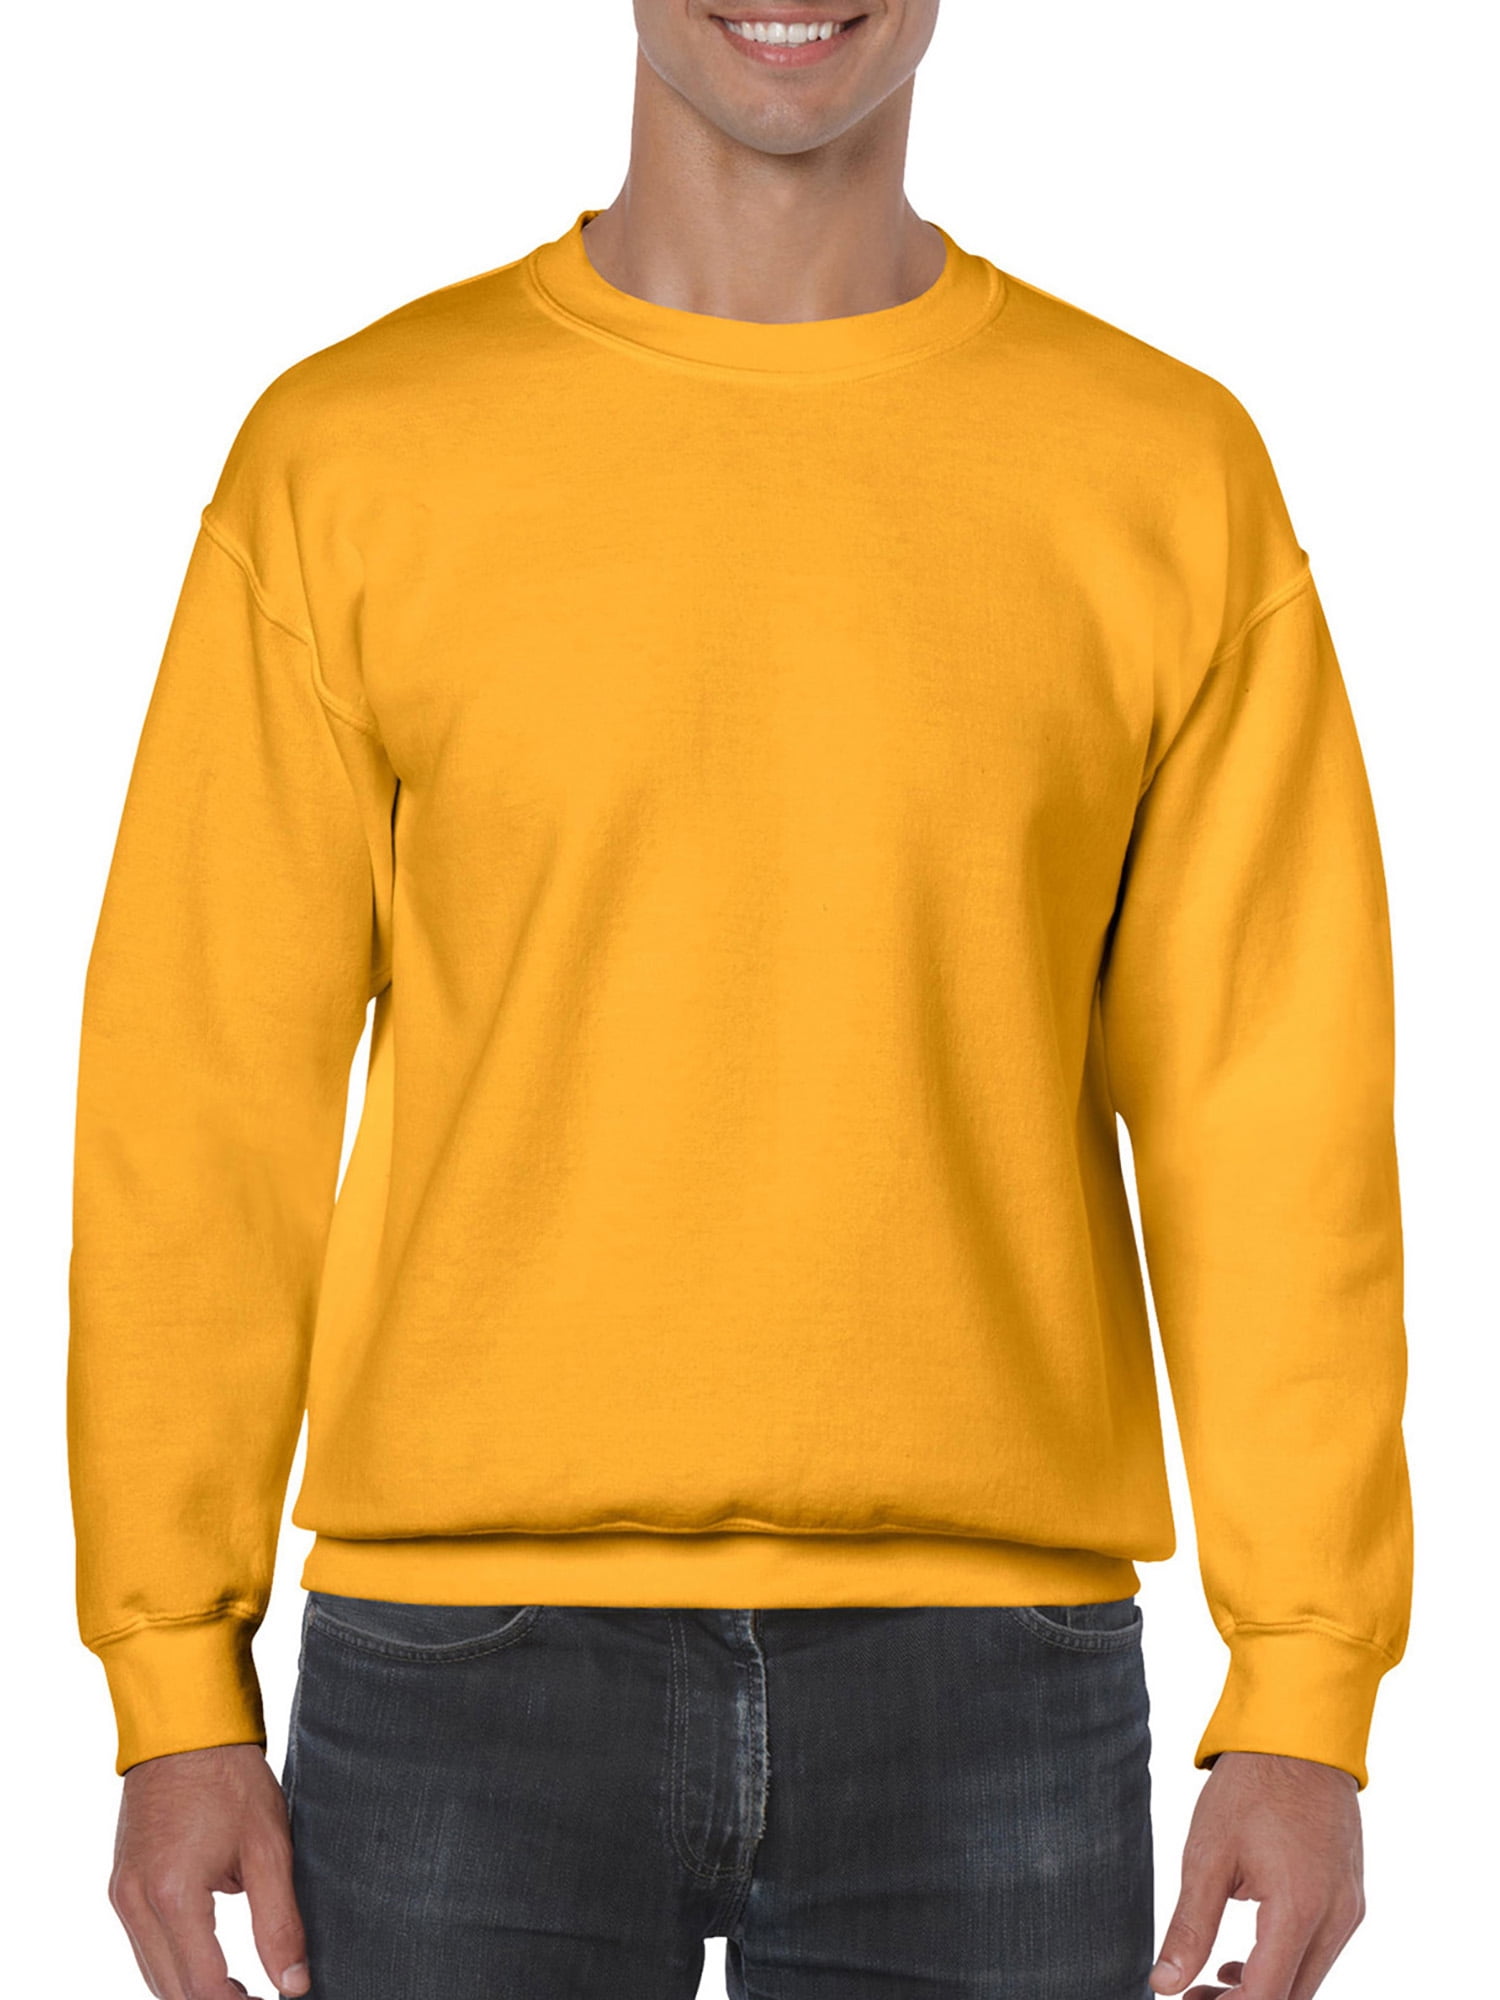 Gildan Crewneck Sweatshirt Walmart Discount, 53% OFF | www 